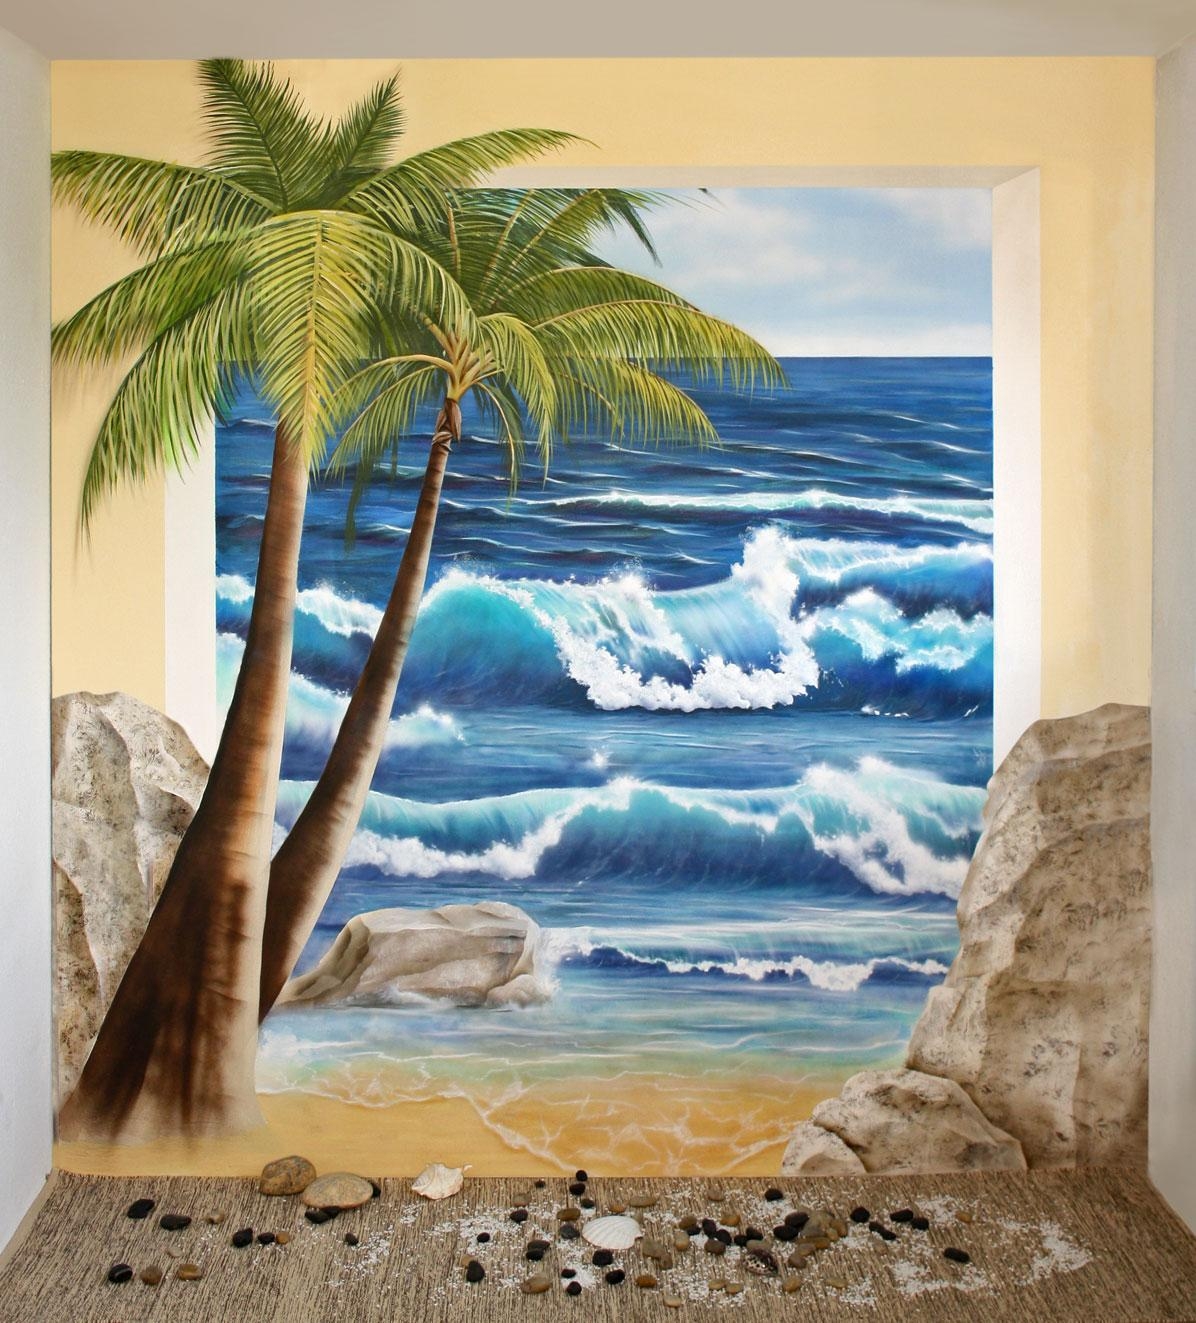 Wandmalerei Saun Ruheraum
Spritzige Welle mit Palmen